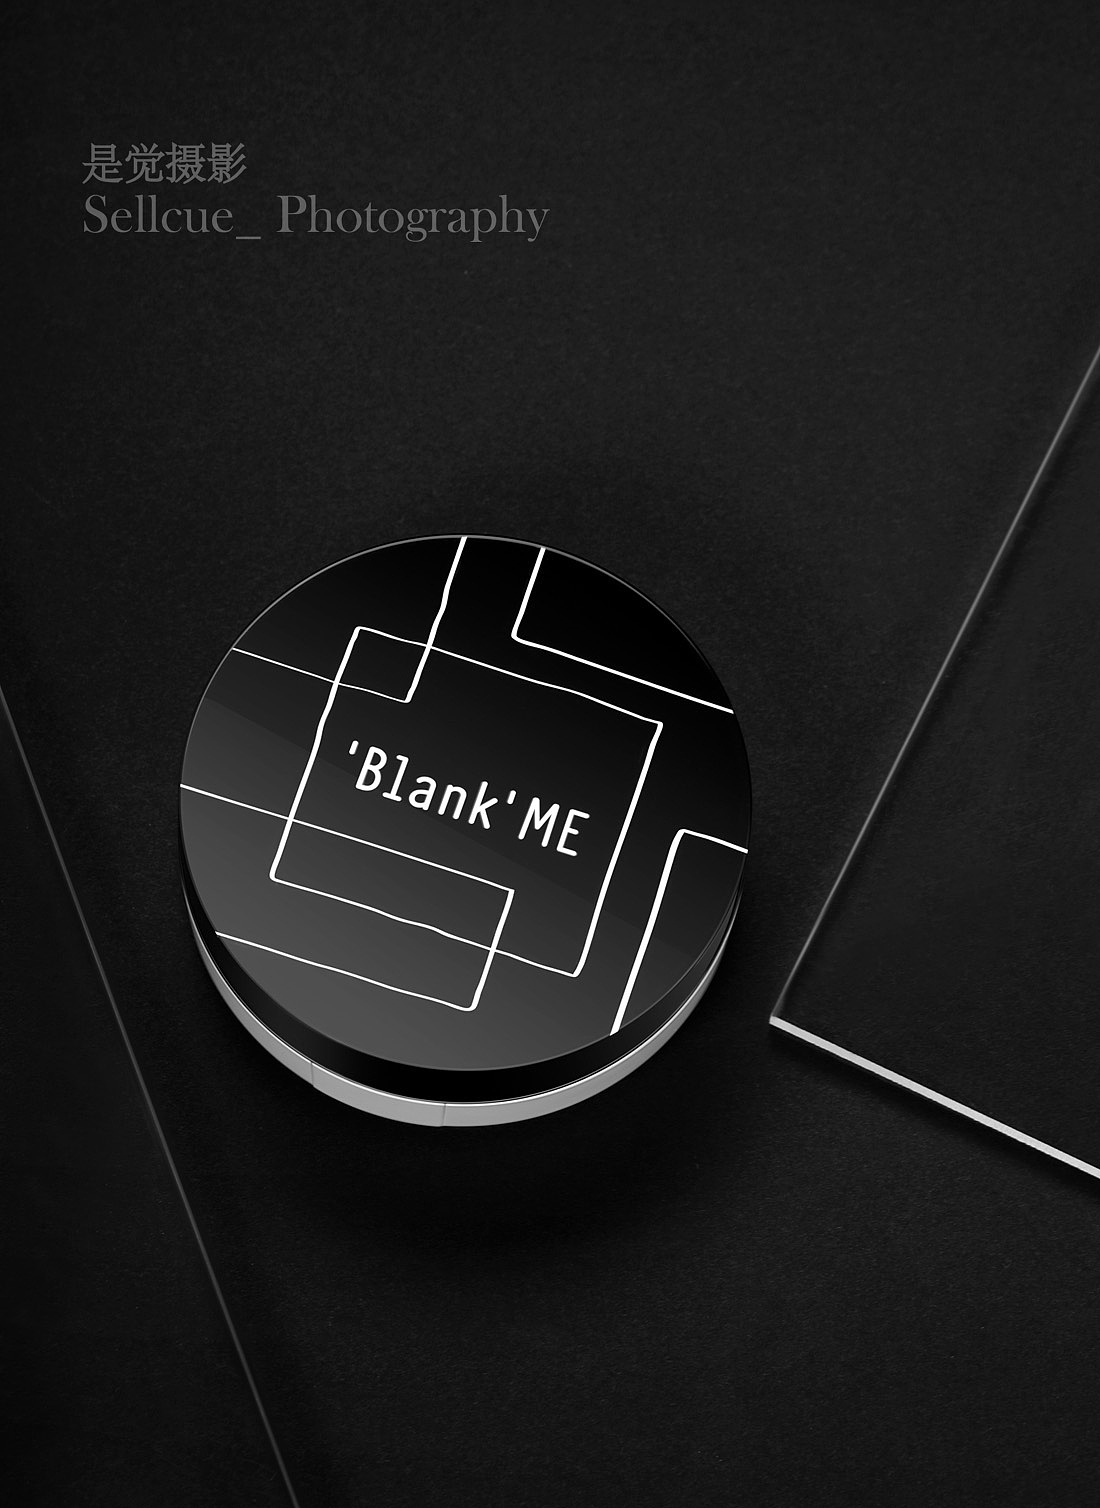 Blank'me 摄影修图 X 是觉摄影